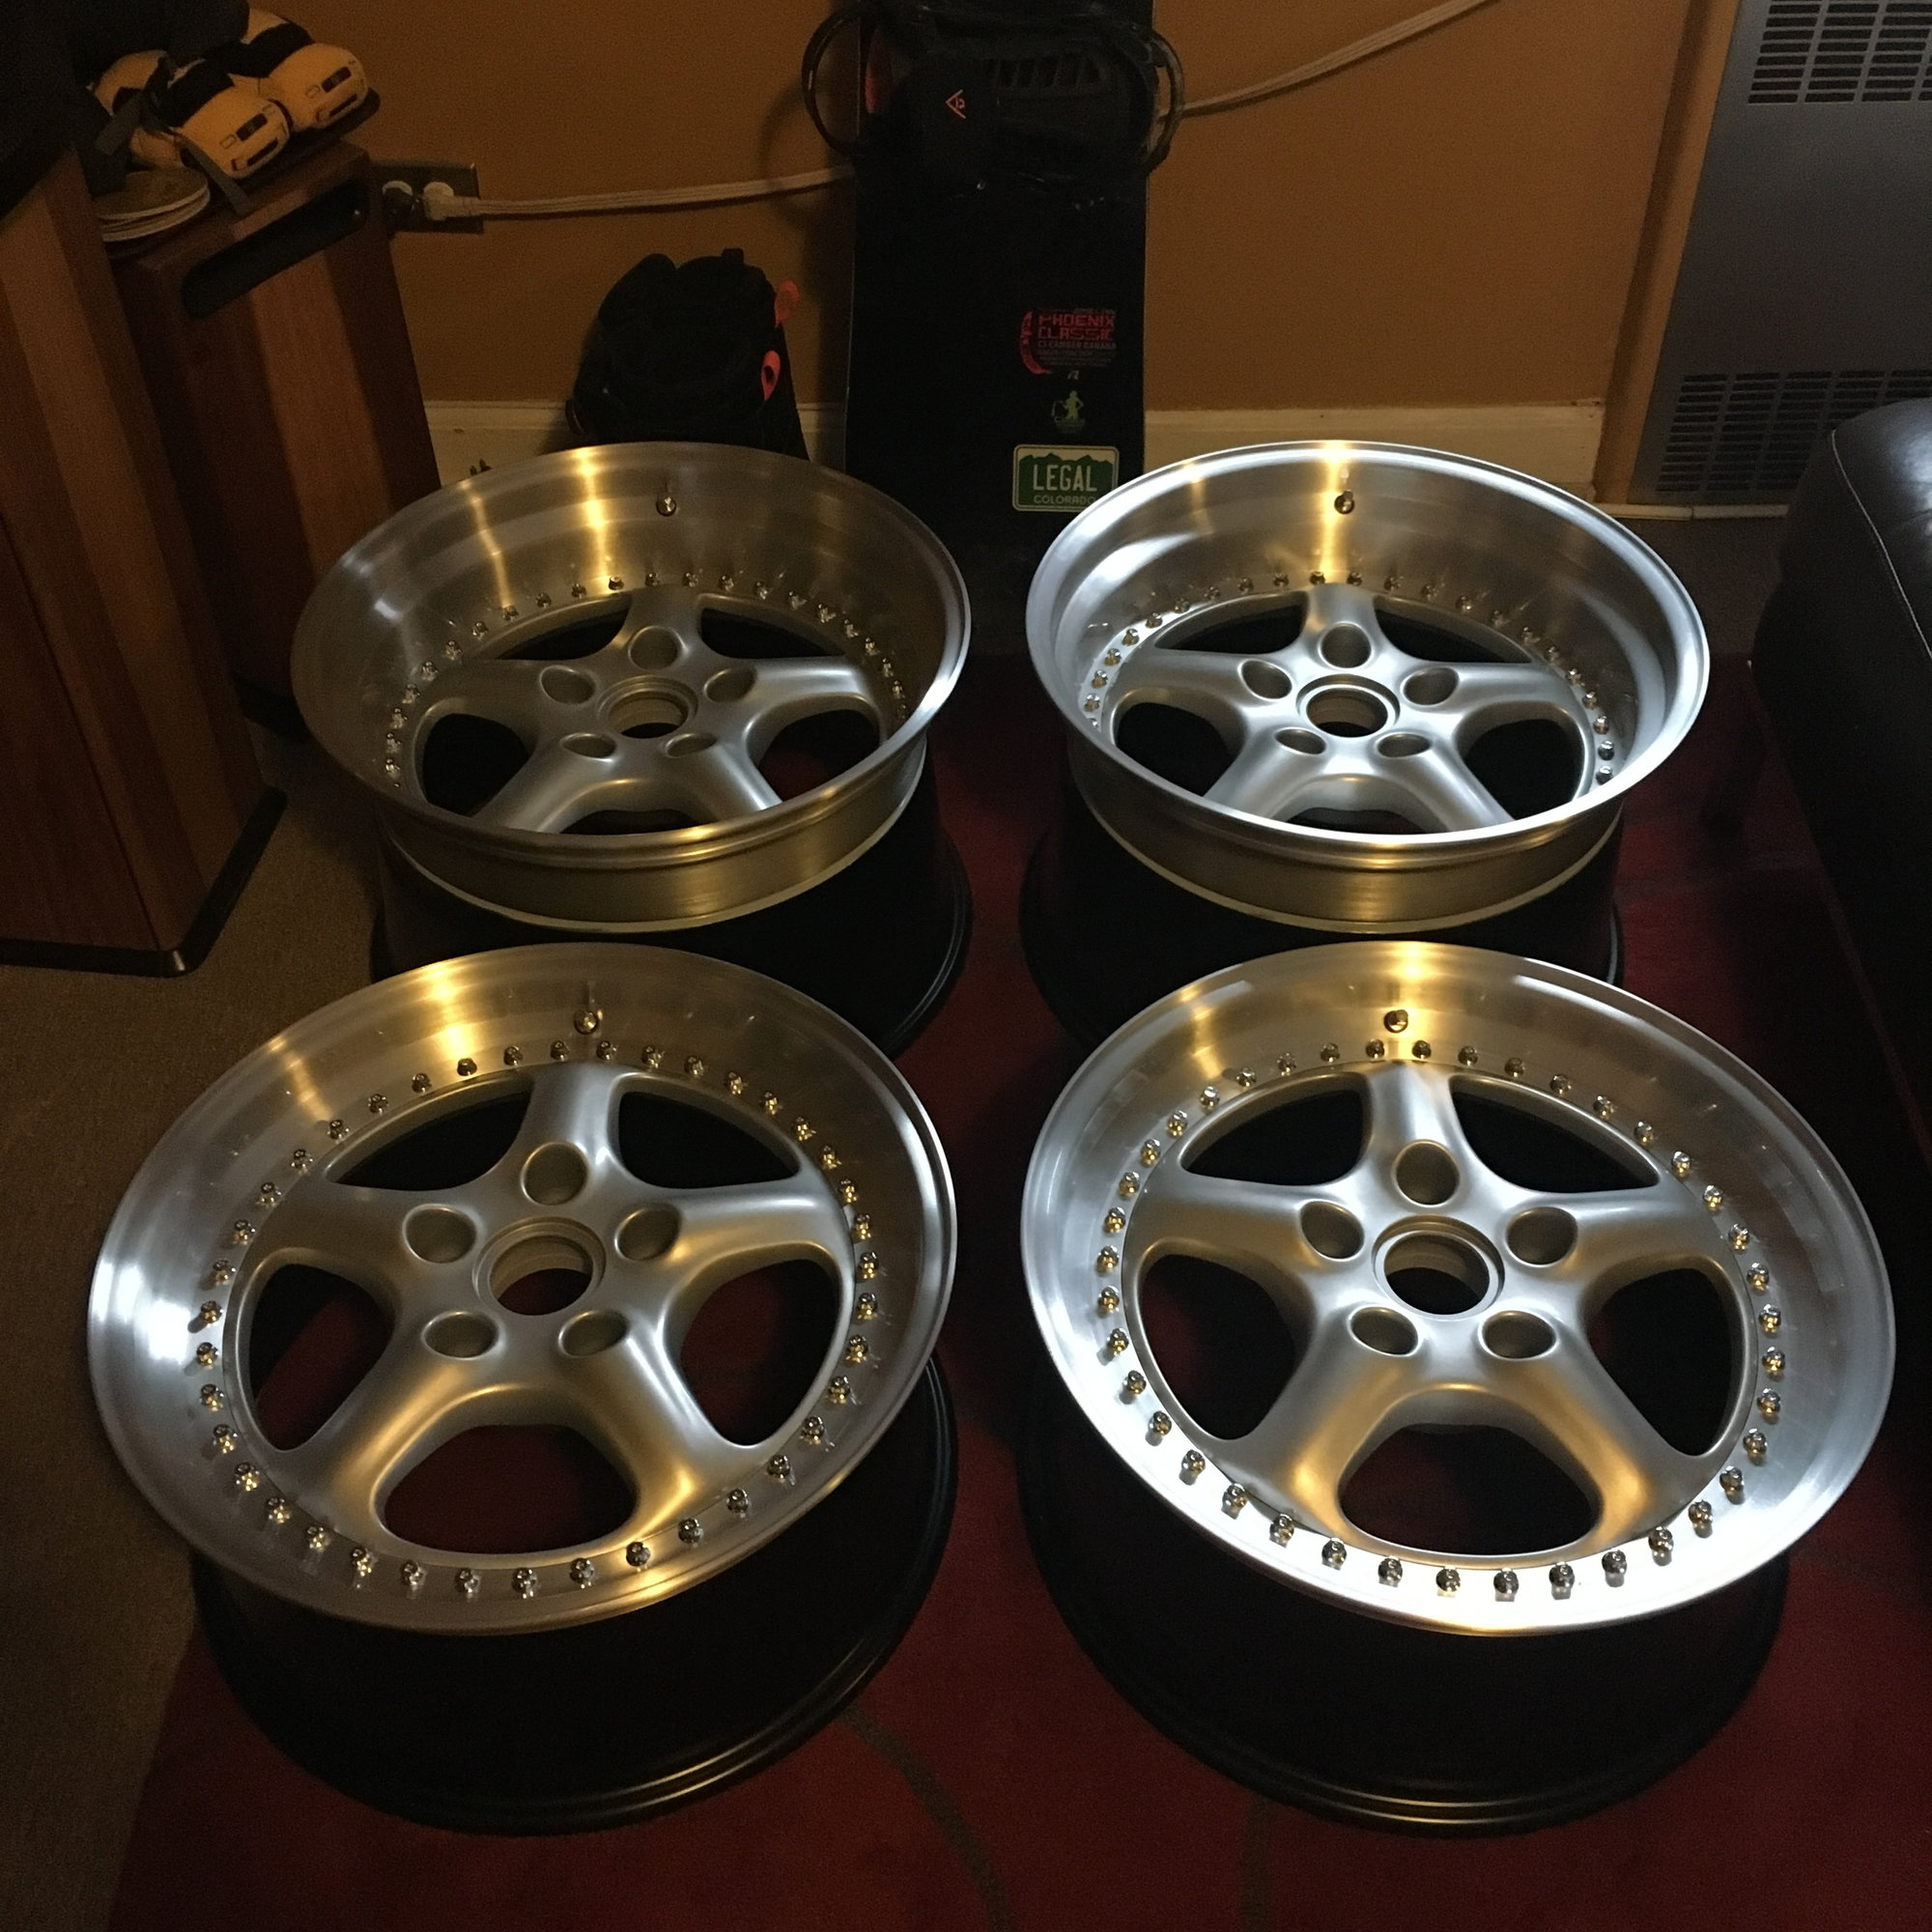 Wheels and Tires/Axles - Rare Custom TechArt Daytona *Deep Dish* Wheels by SpeedLine - Used - 2001 to 2004 Porsche 911 - Bayside, NY 11361, United States